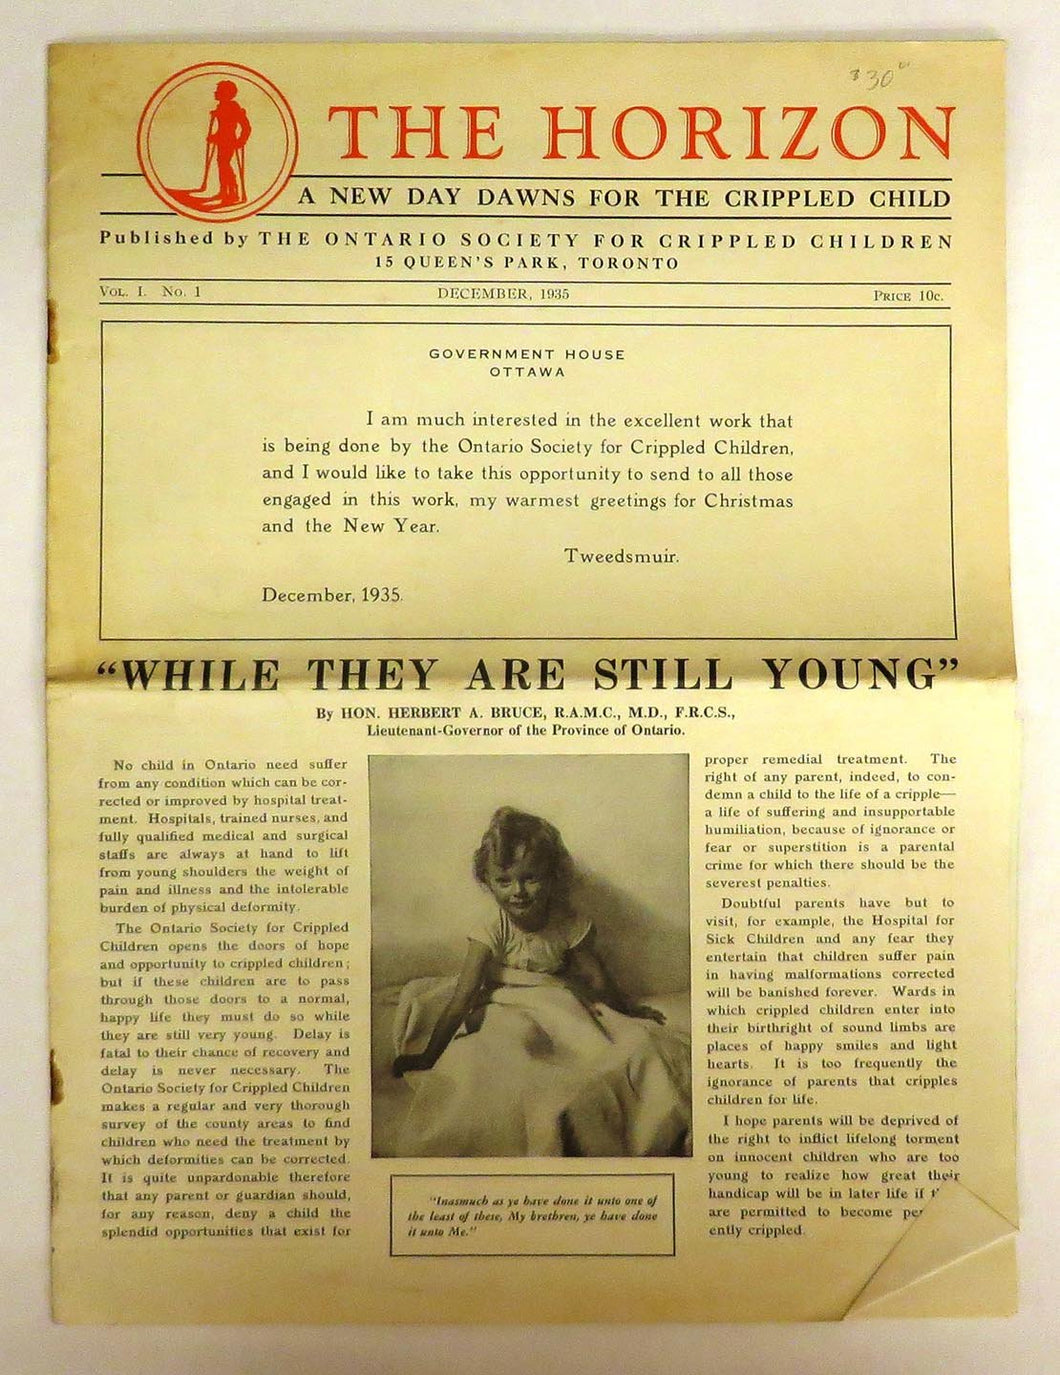 The Horizon, December 1935